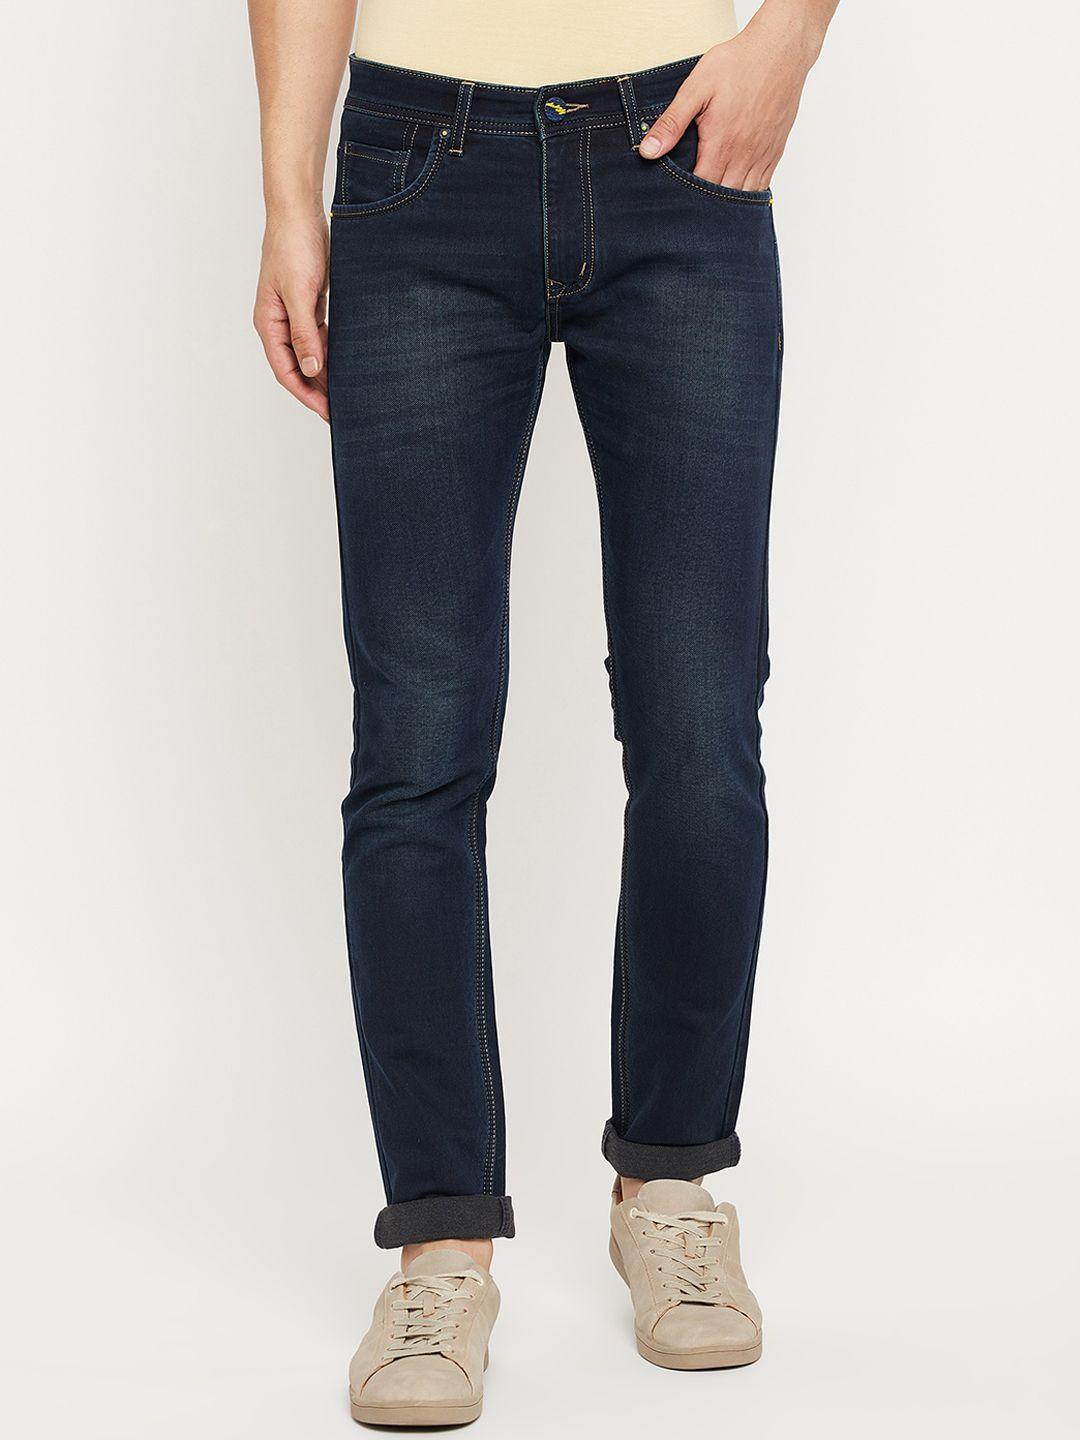 duke-men-slim-fit-mid-rise-dark-shade-cotton-clean-look-jeans